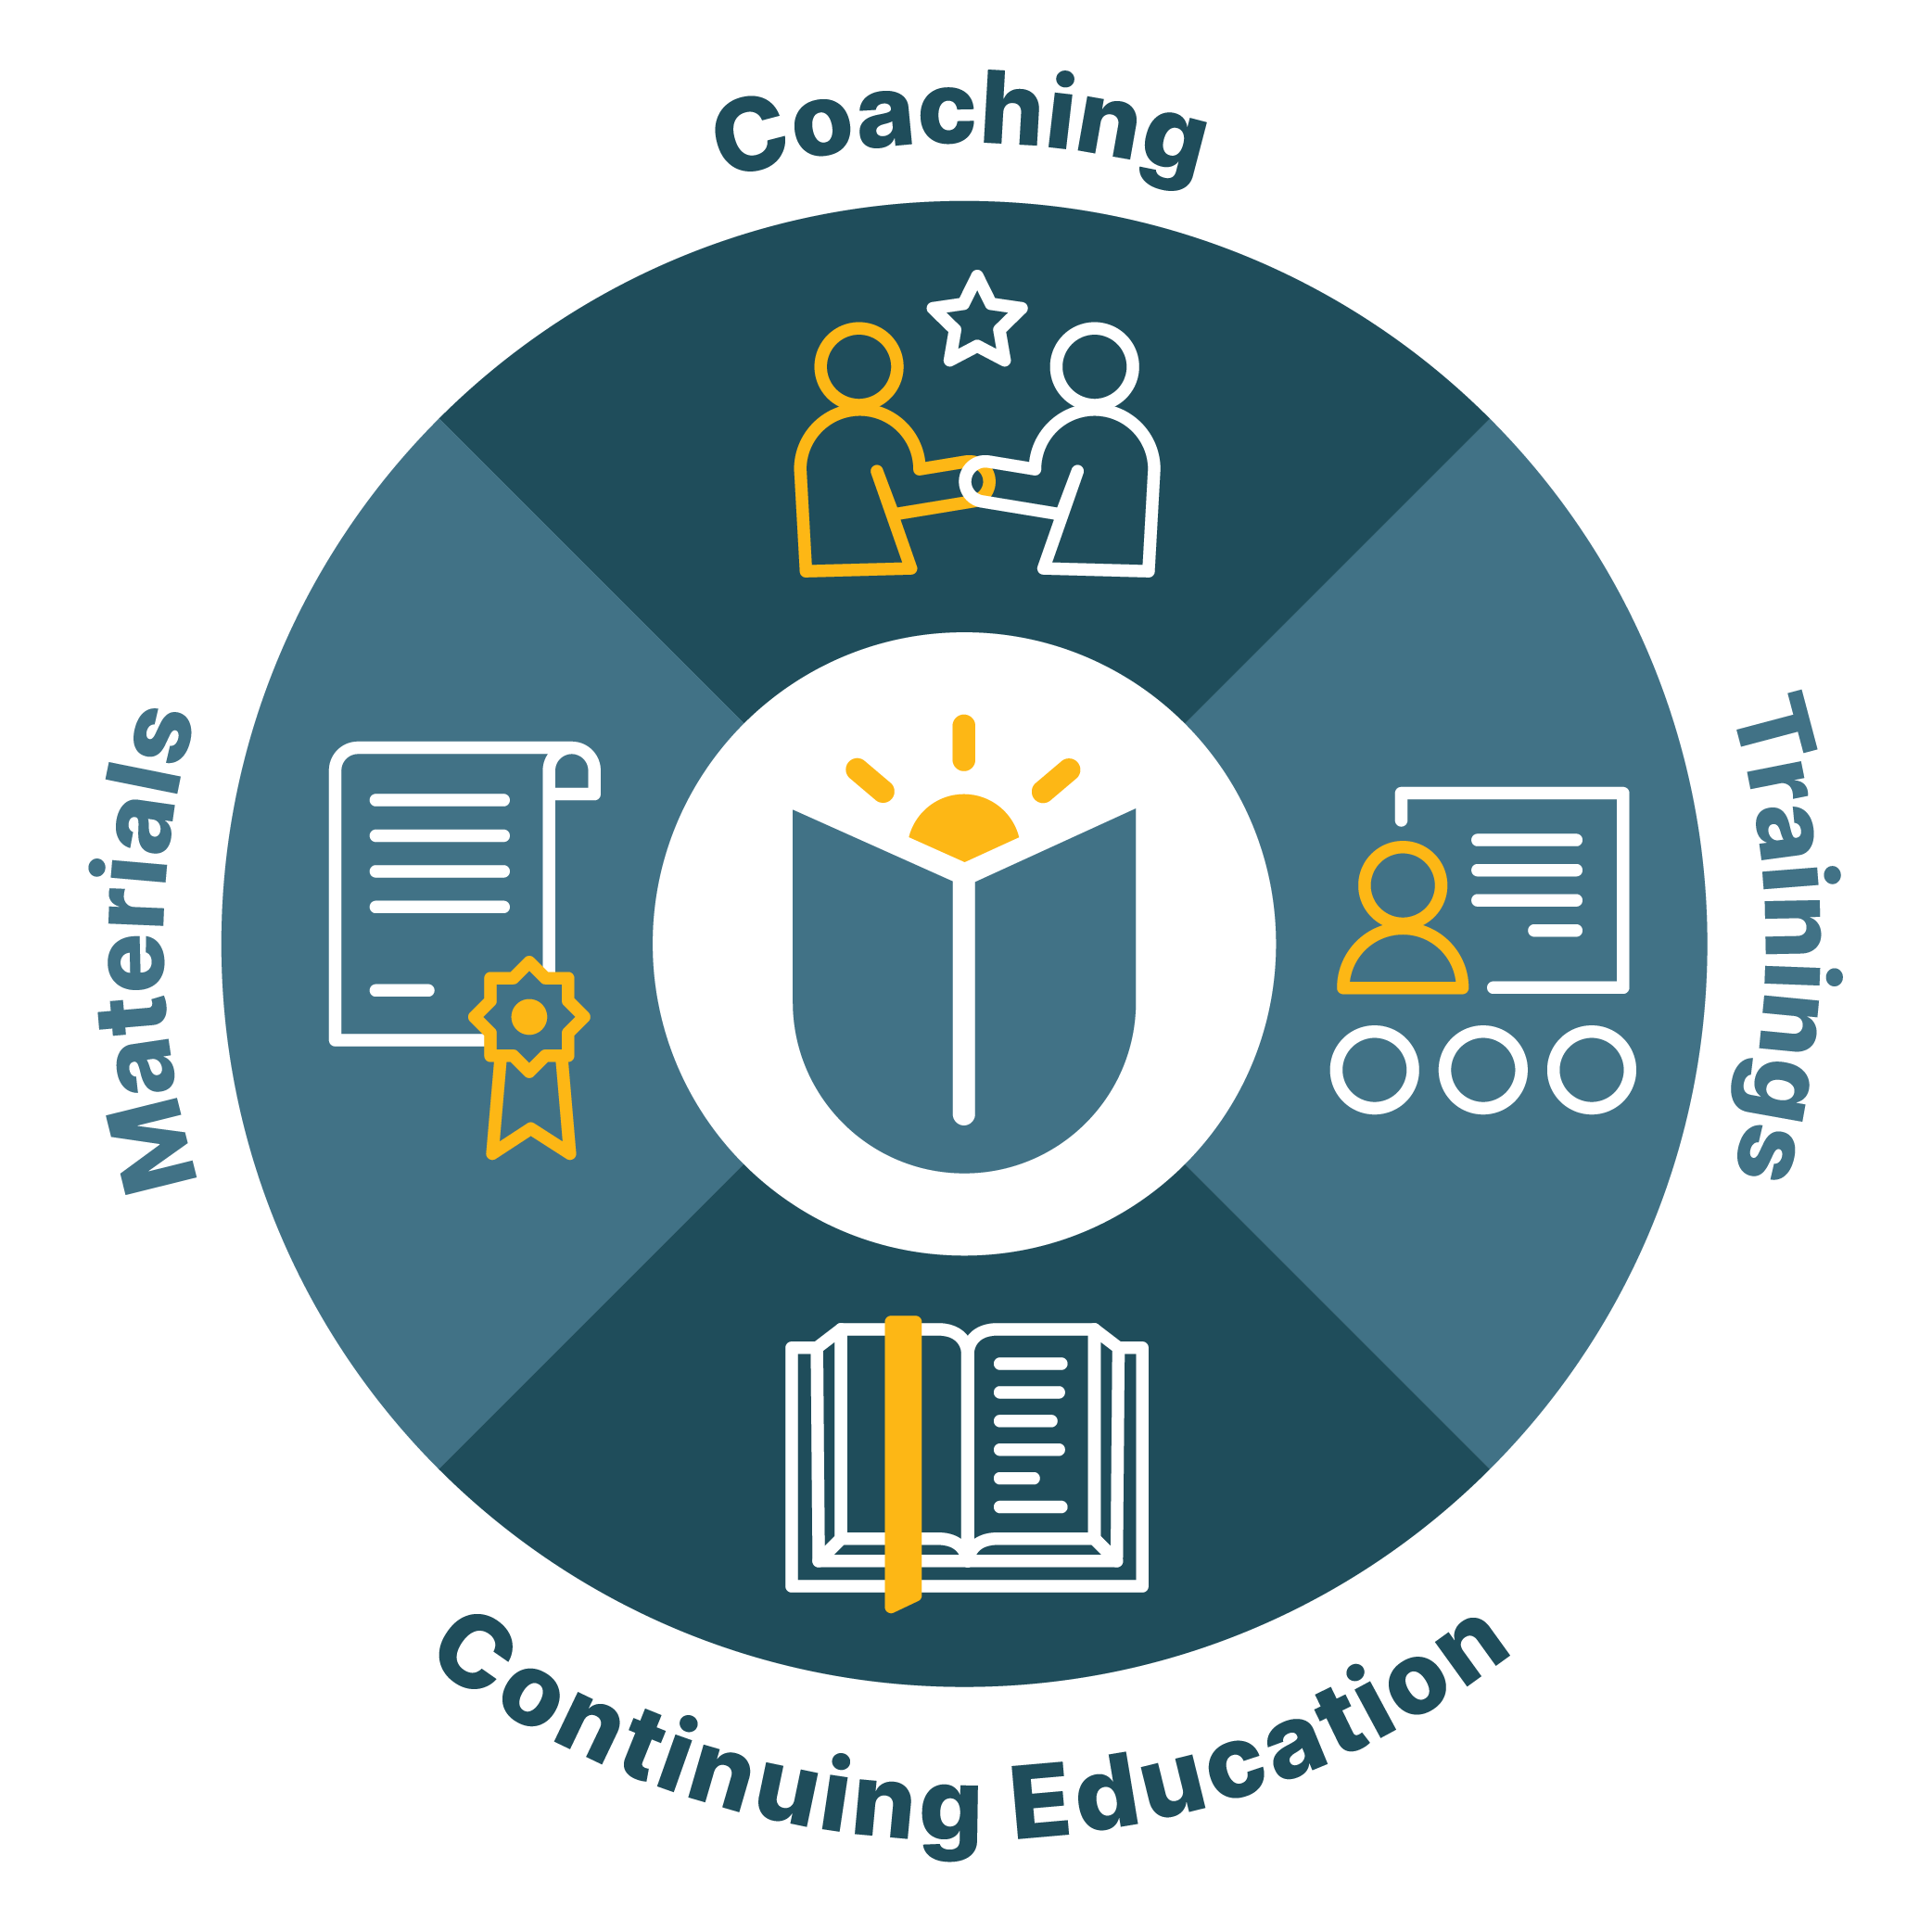 1. Coaching 2. Trainings 3. Materials 4. Continuing Education